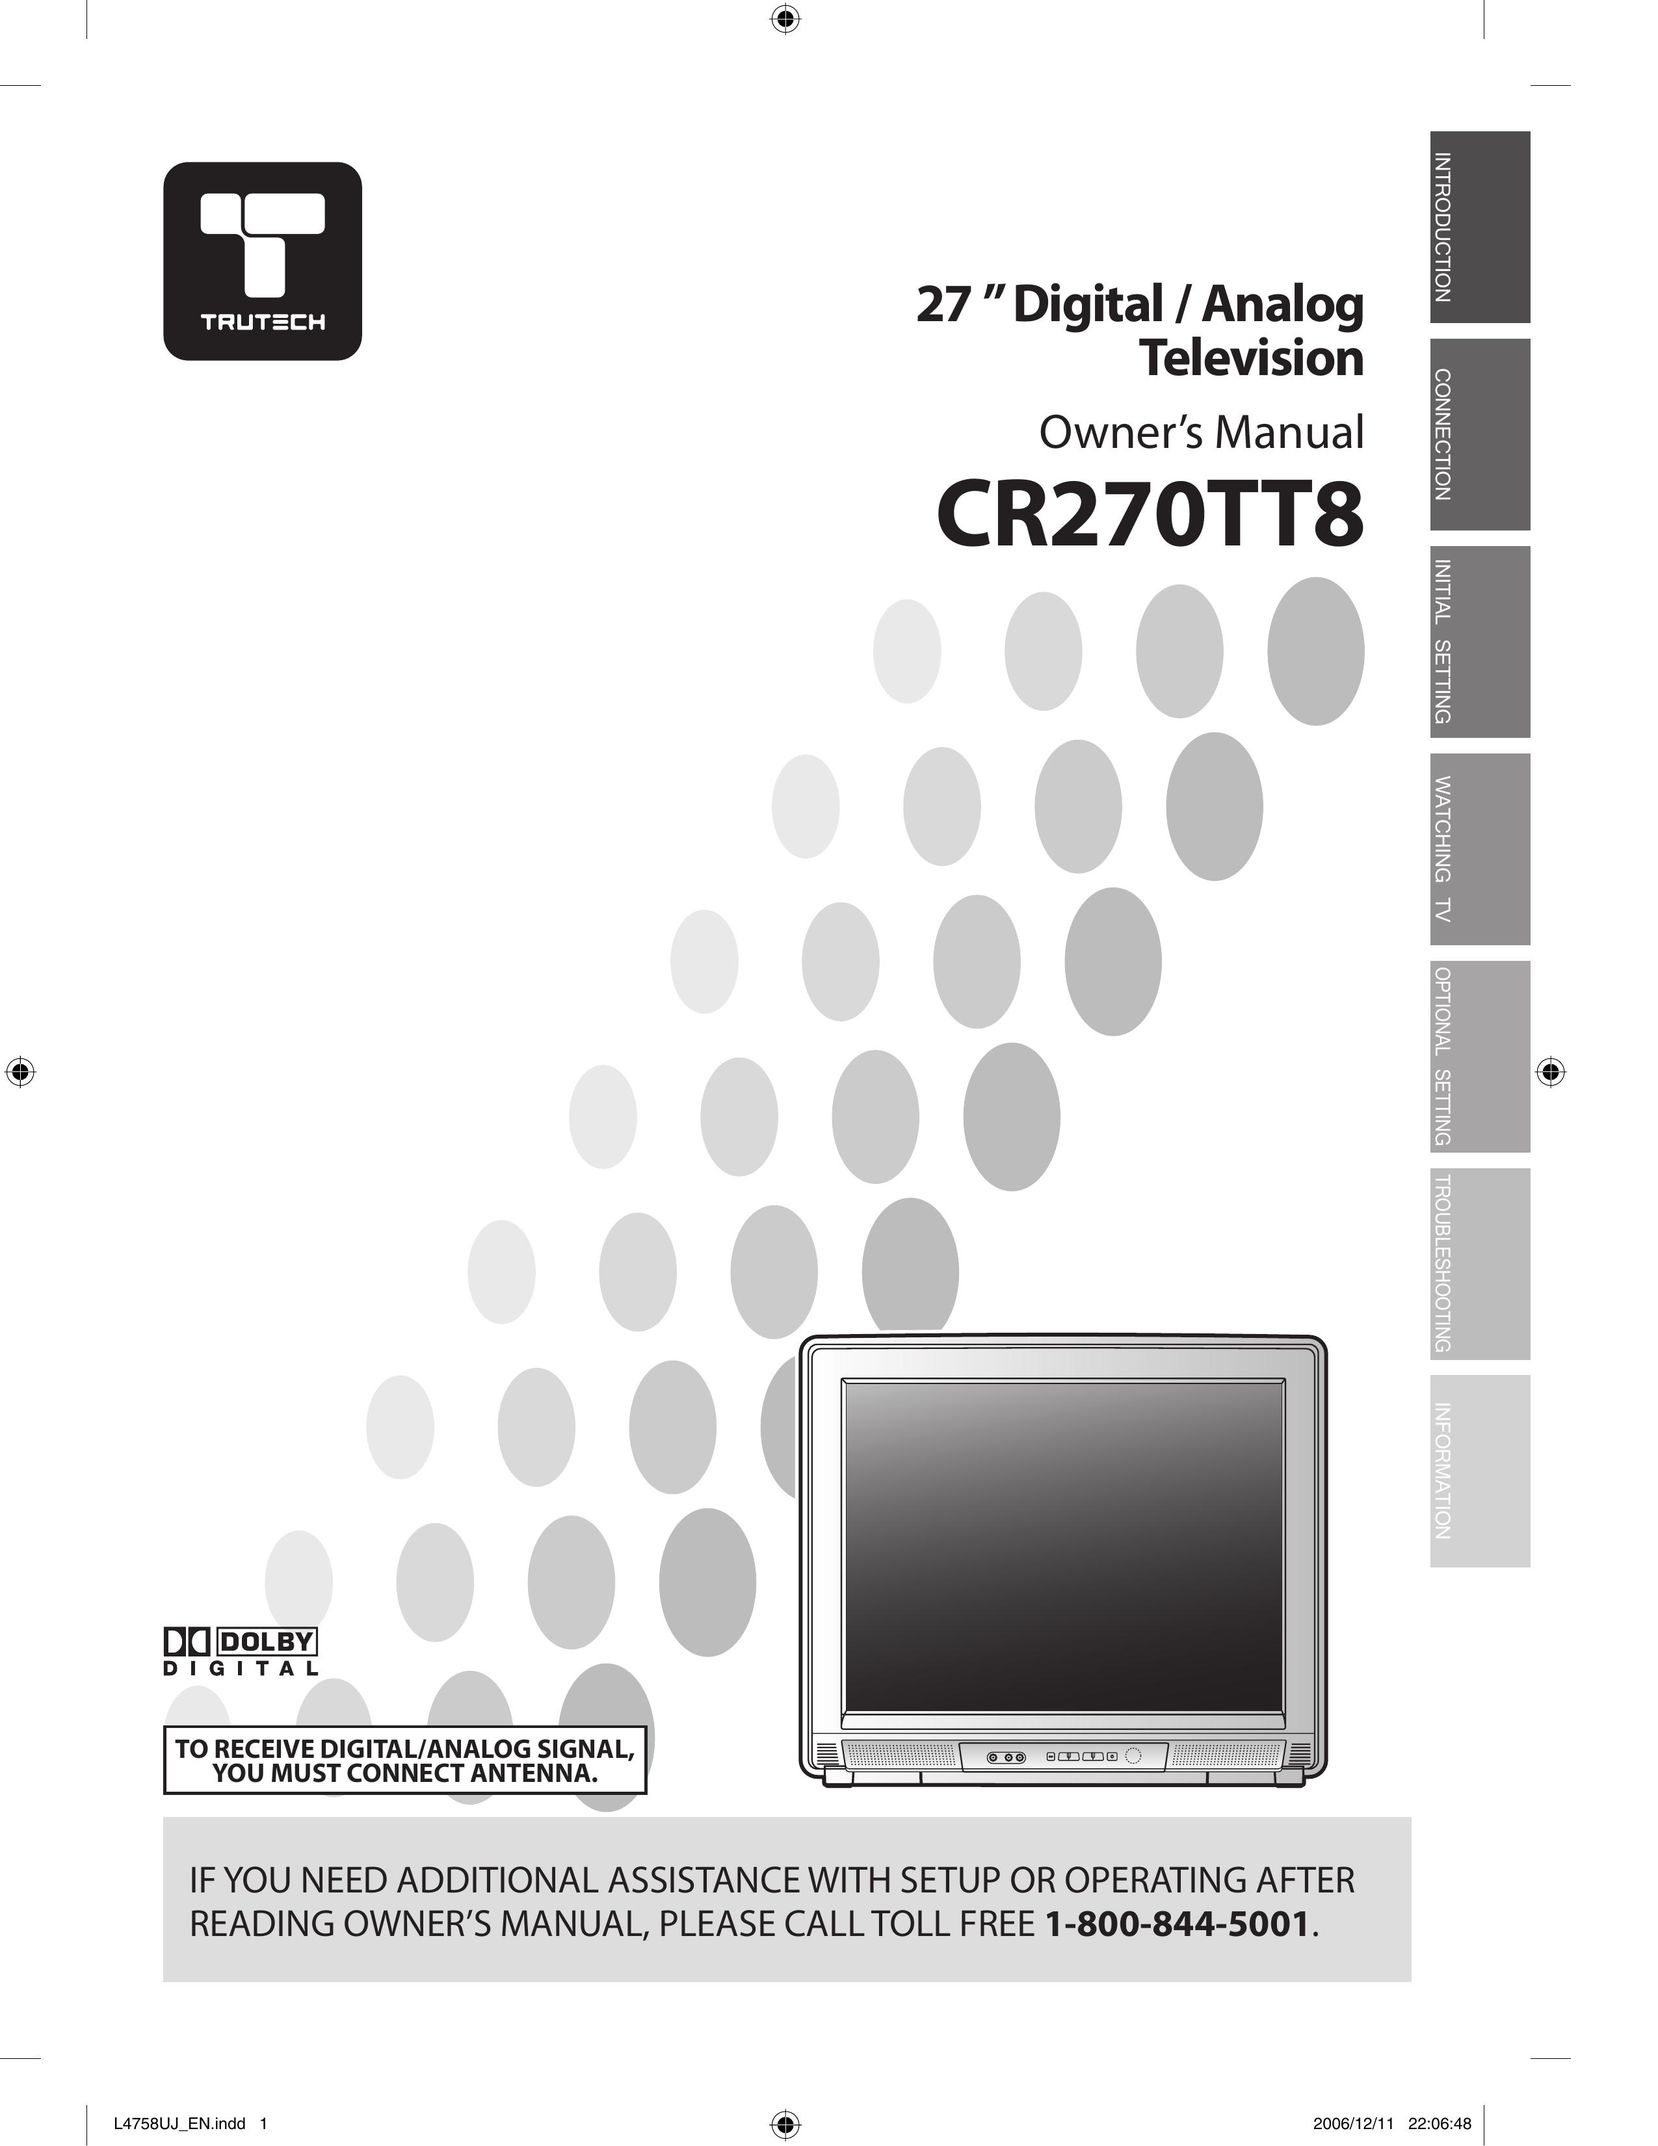 FUNAI CR270TT8 CRT Television User Manual (Page 1)